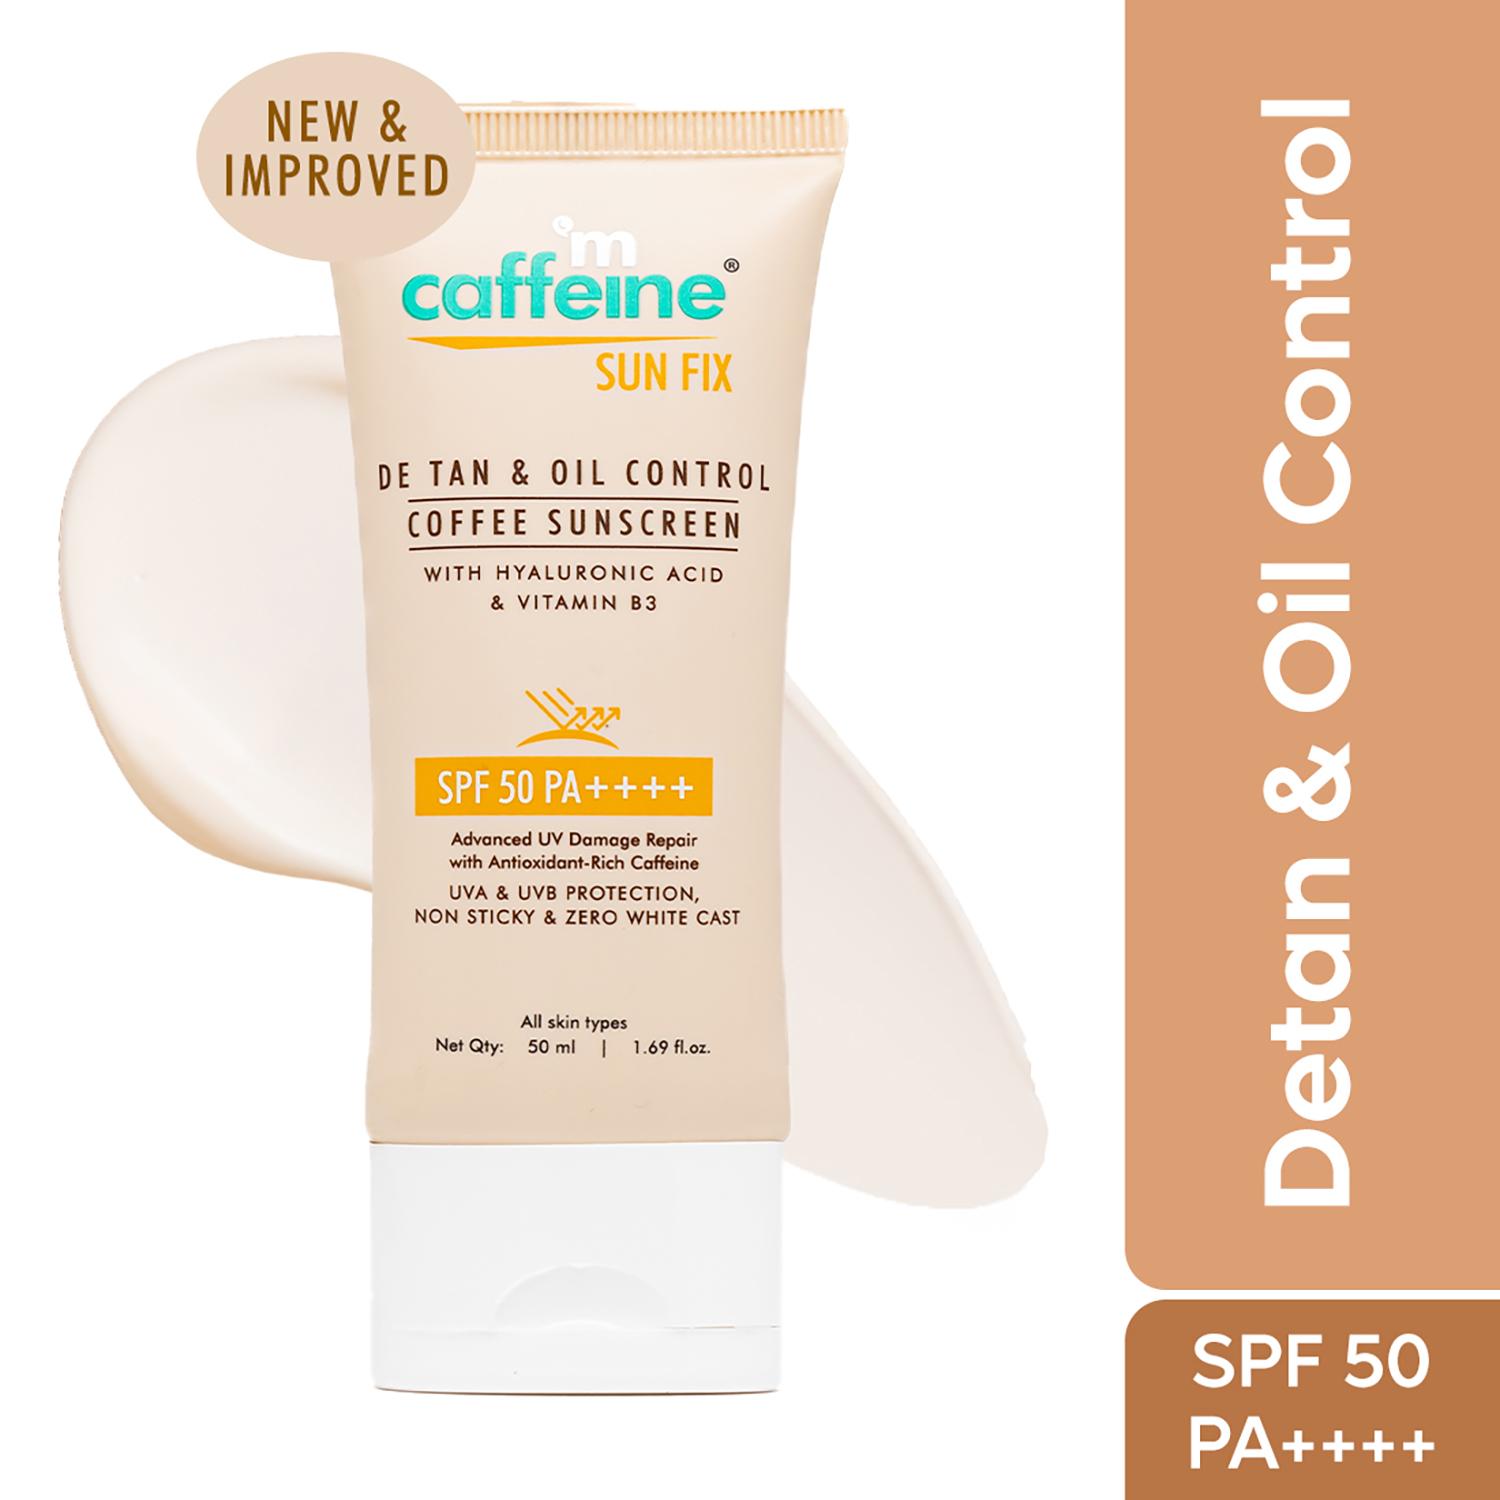 mCaffeine | mCaffeine Detan & Oil Control Sunscreen SPF 50 PA++++ with Coffee, UV Protection, No White Cast